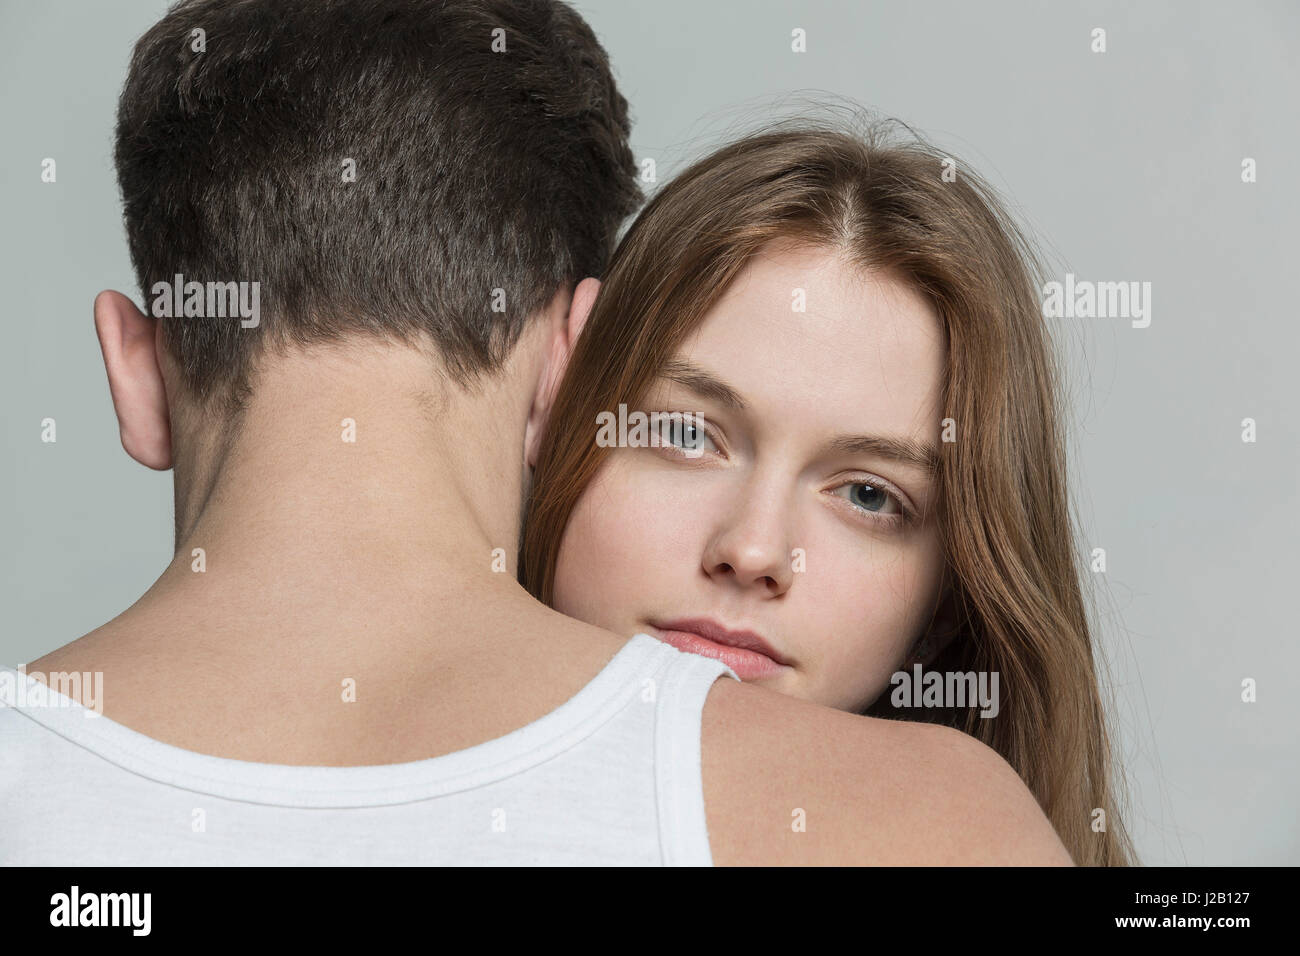 Portrait of woman embracing boyfriend against gray background Stock Photo